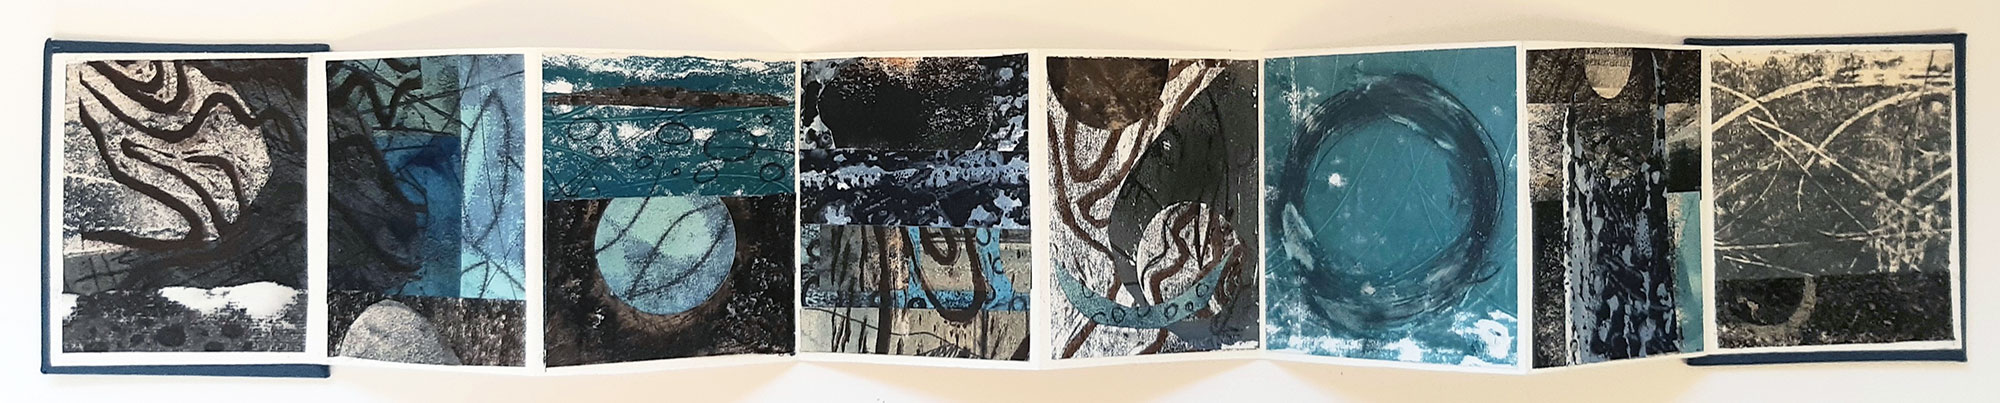 Open Sea, Concertina Book, Hand Printed Paper, Collage, 8cm x 8cm closed, opens to 60cm x 8cm